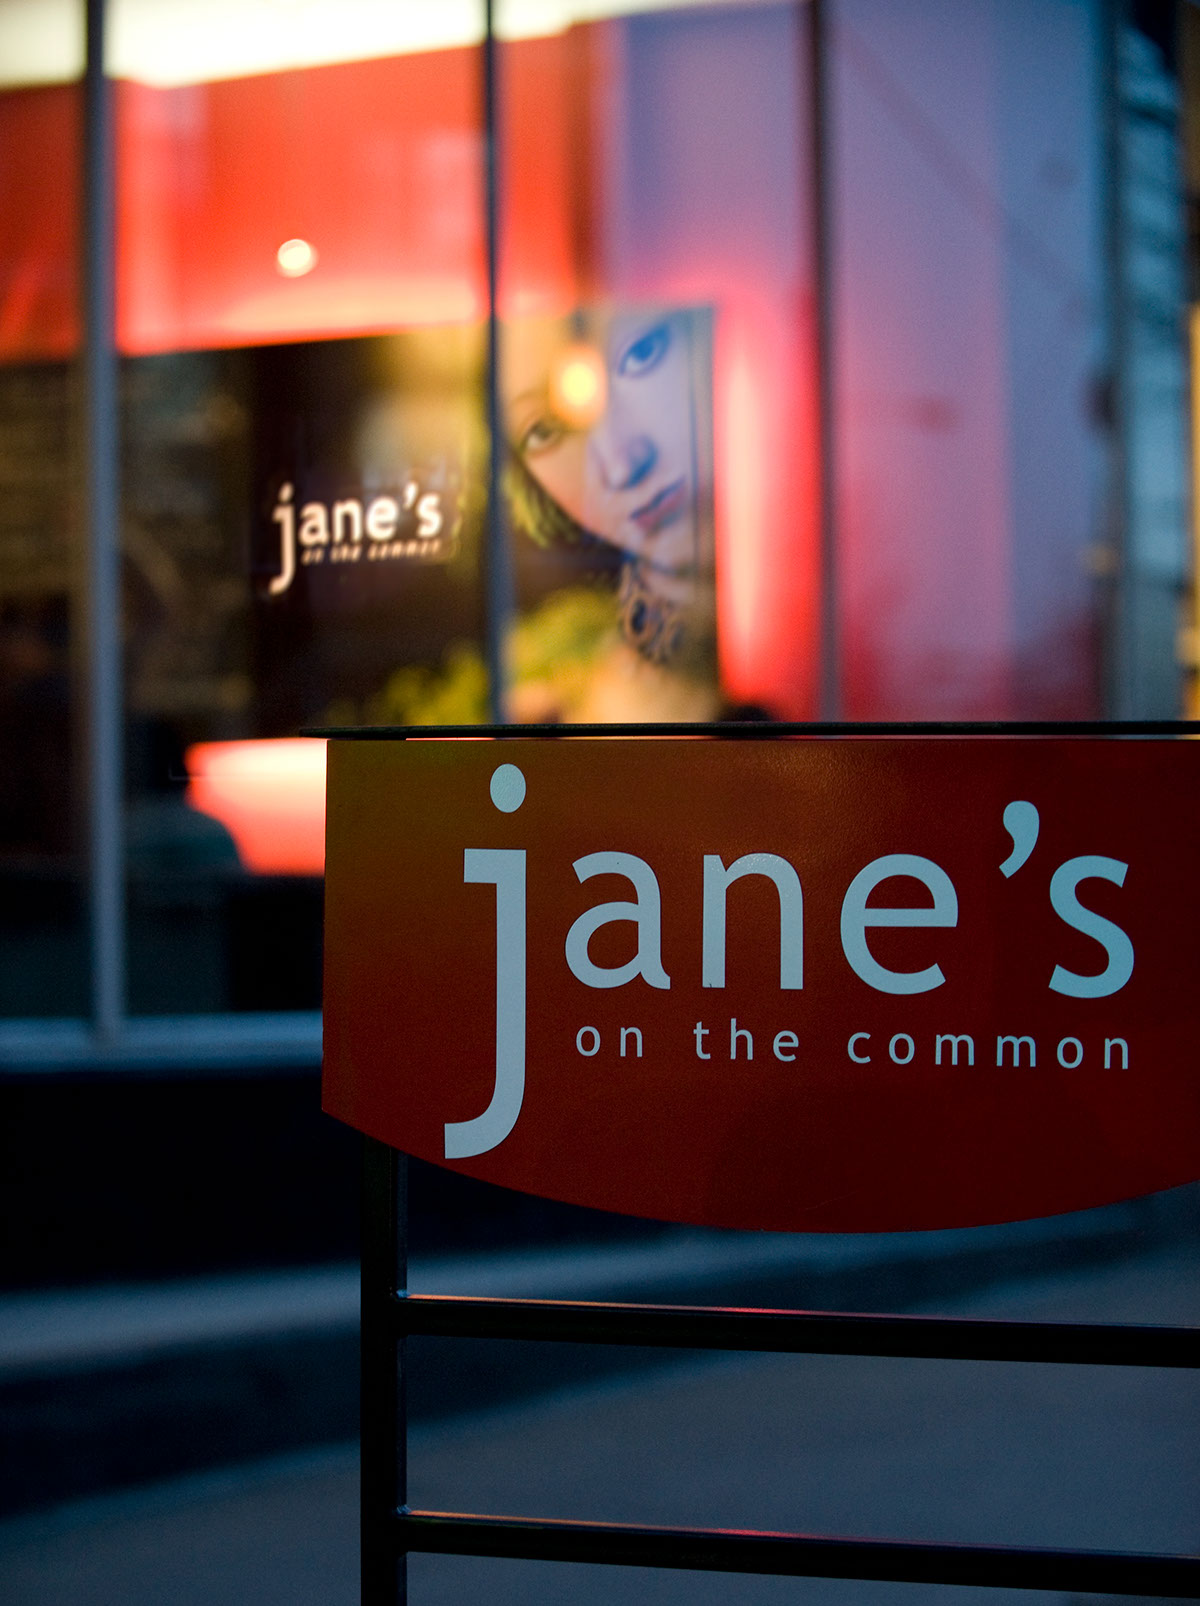 Adobe Portfolio Retail restaurant janes janes on the common